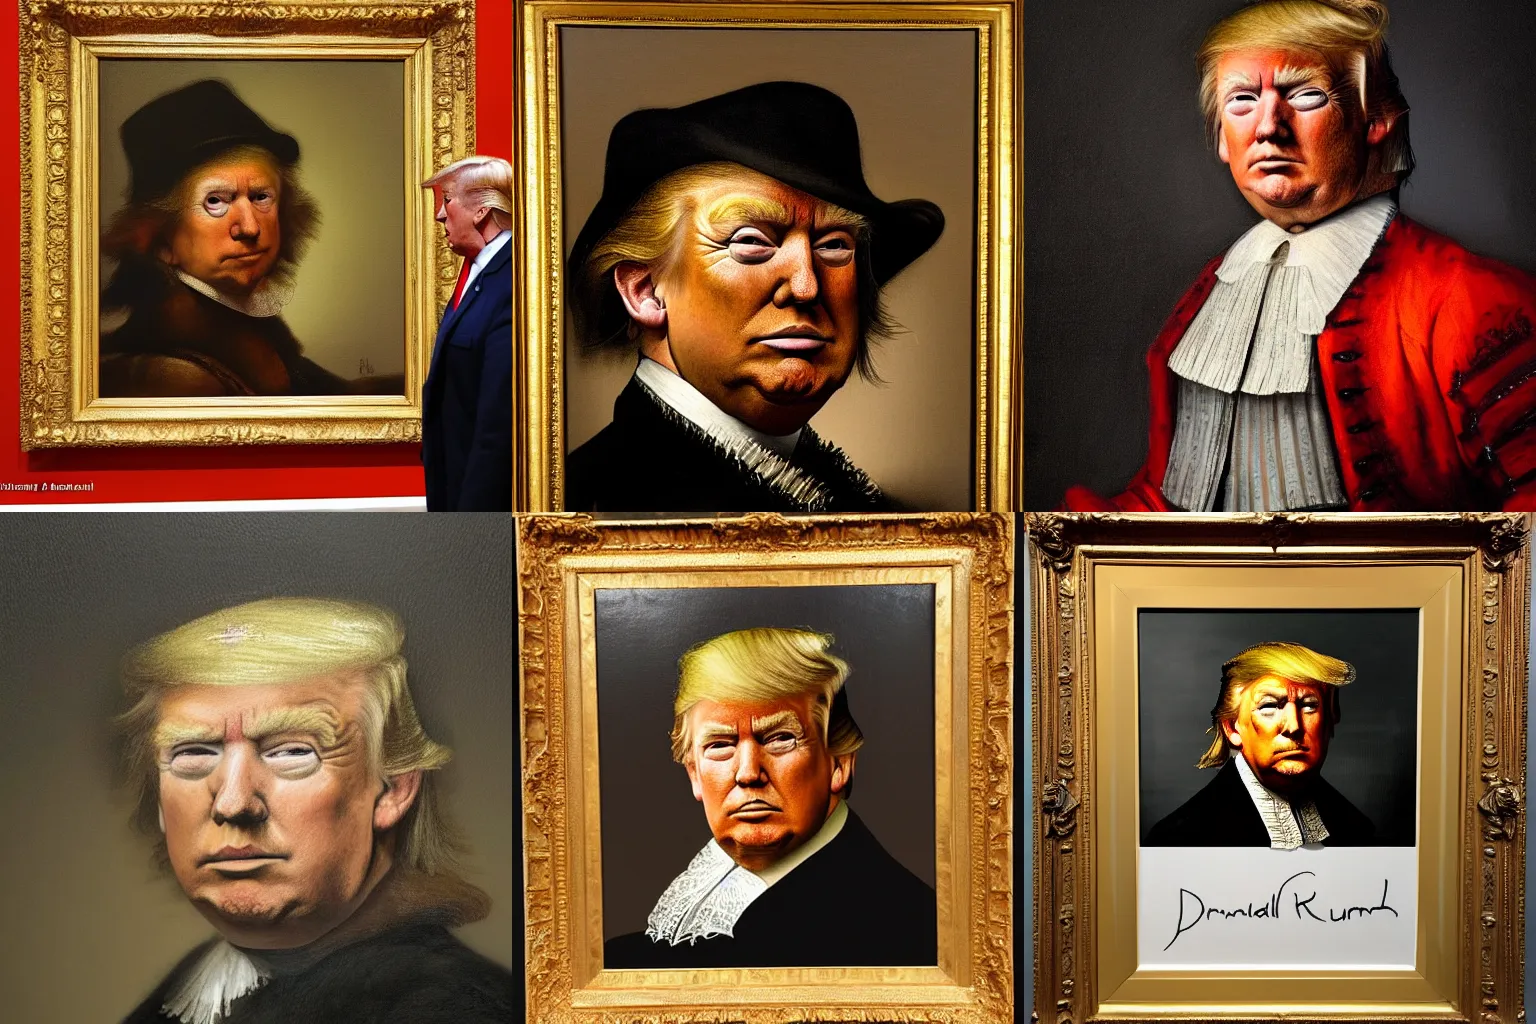 Prompt: A painting of Donald Trump drawn by Rembrandt van Rijn